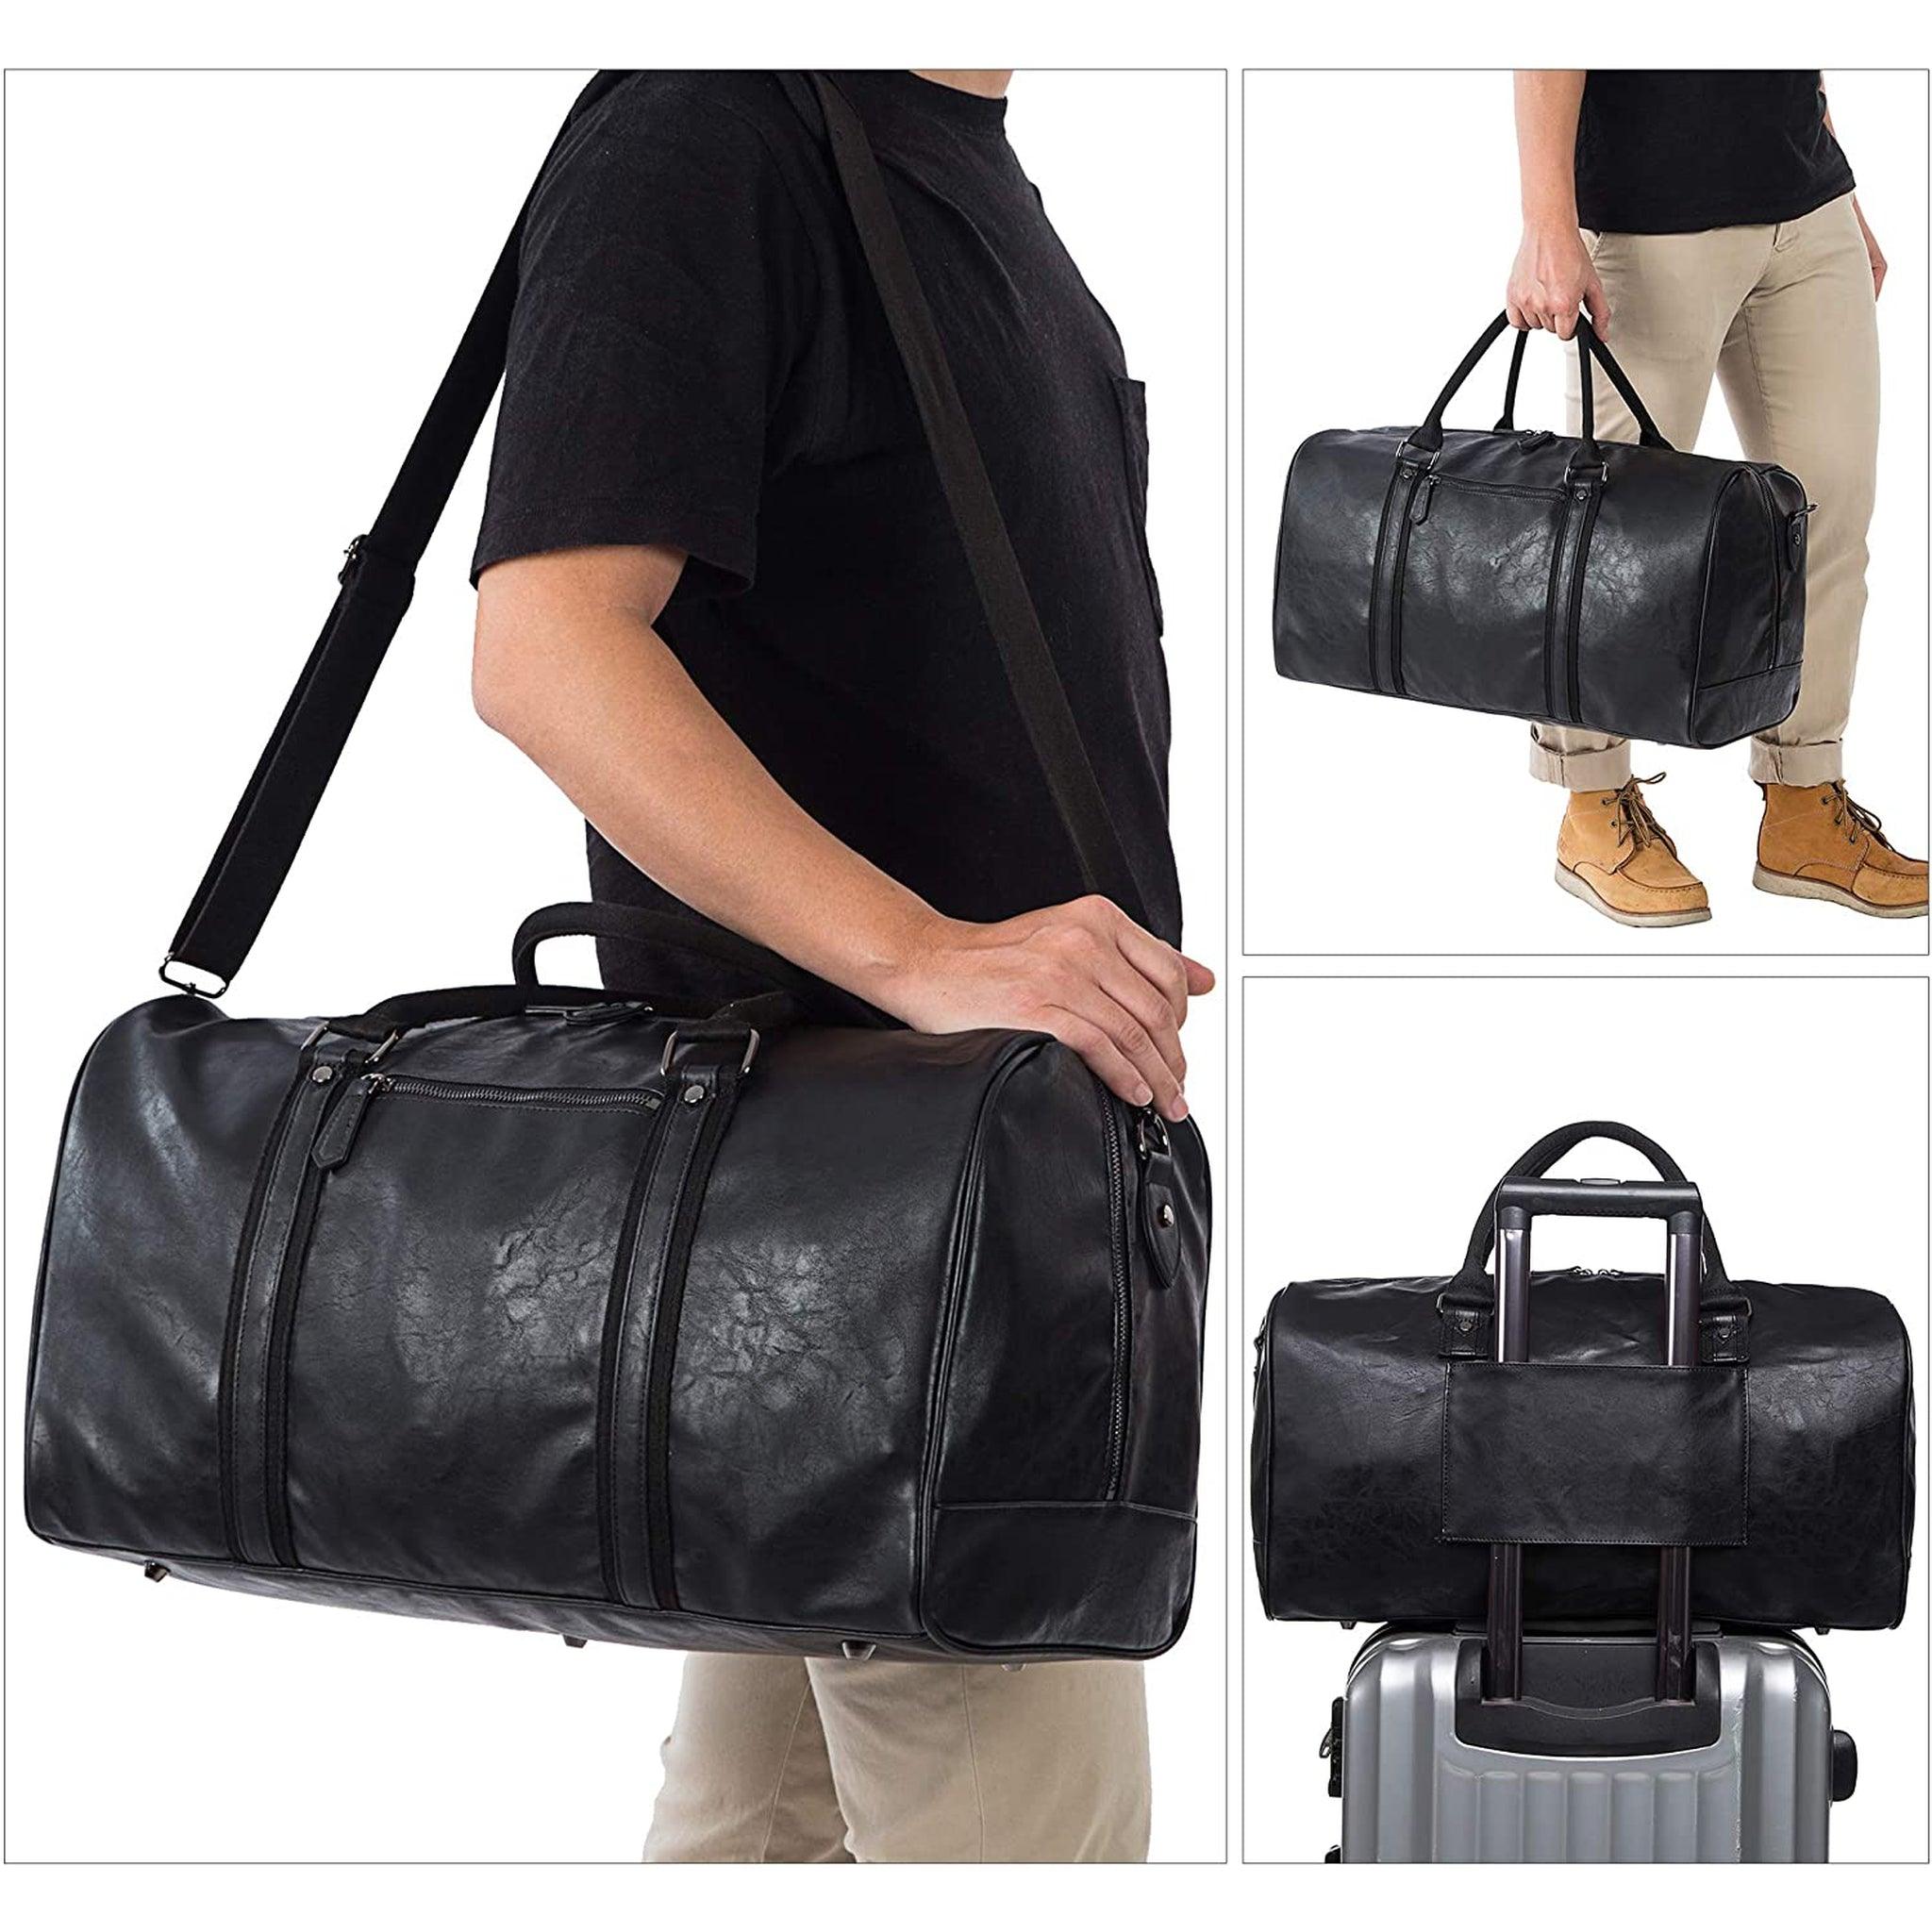 Premium Leather Duffle Bag - FR Fashion Co.